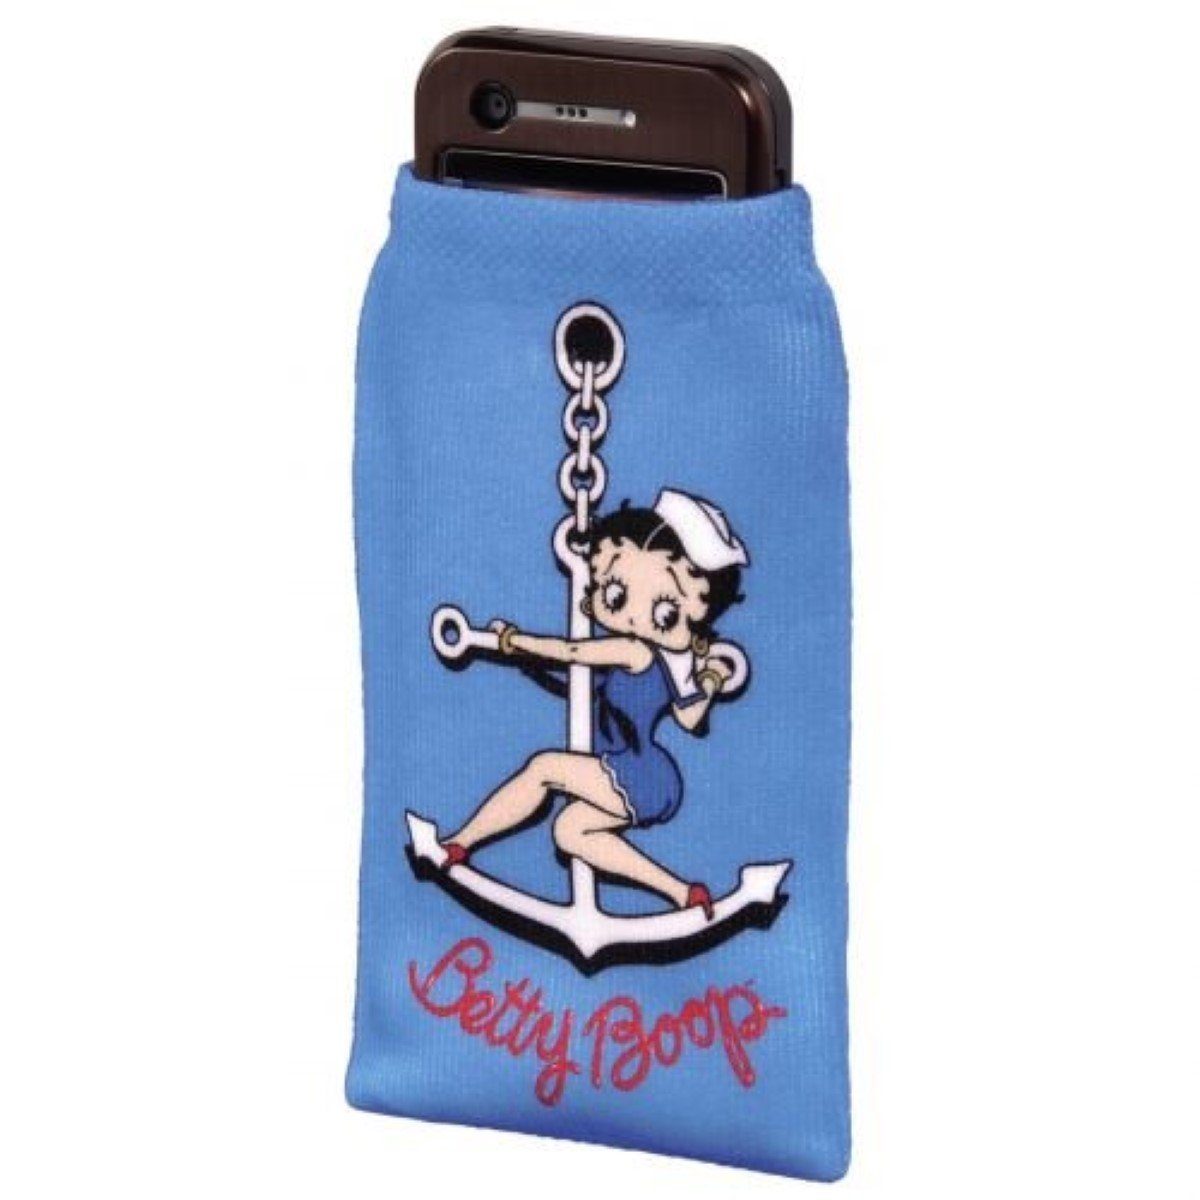 j-straps Handyhülle Handy-Socke Tasche Hülle Etui Betty Boop, Motiv Betty Boop Sea Breeze mit Anker, Etui für Handy MP4 MP3-Player Digital-Kamera